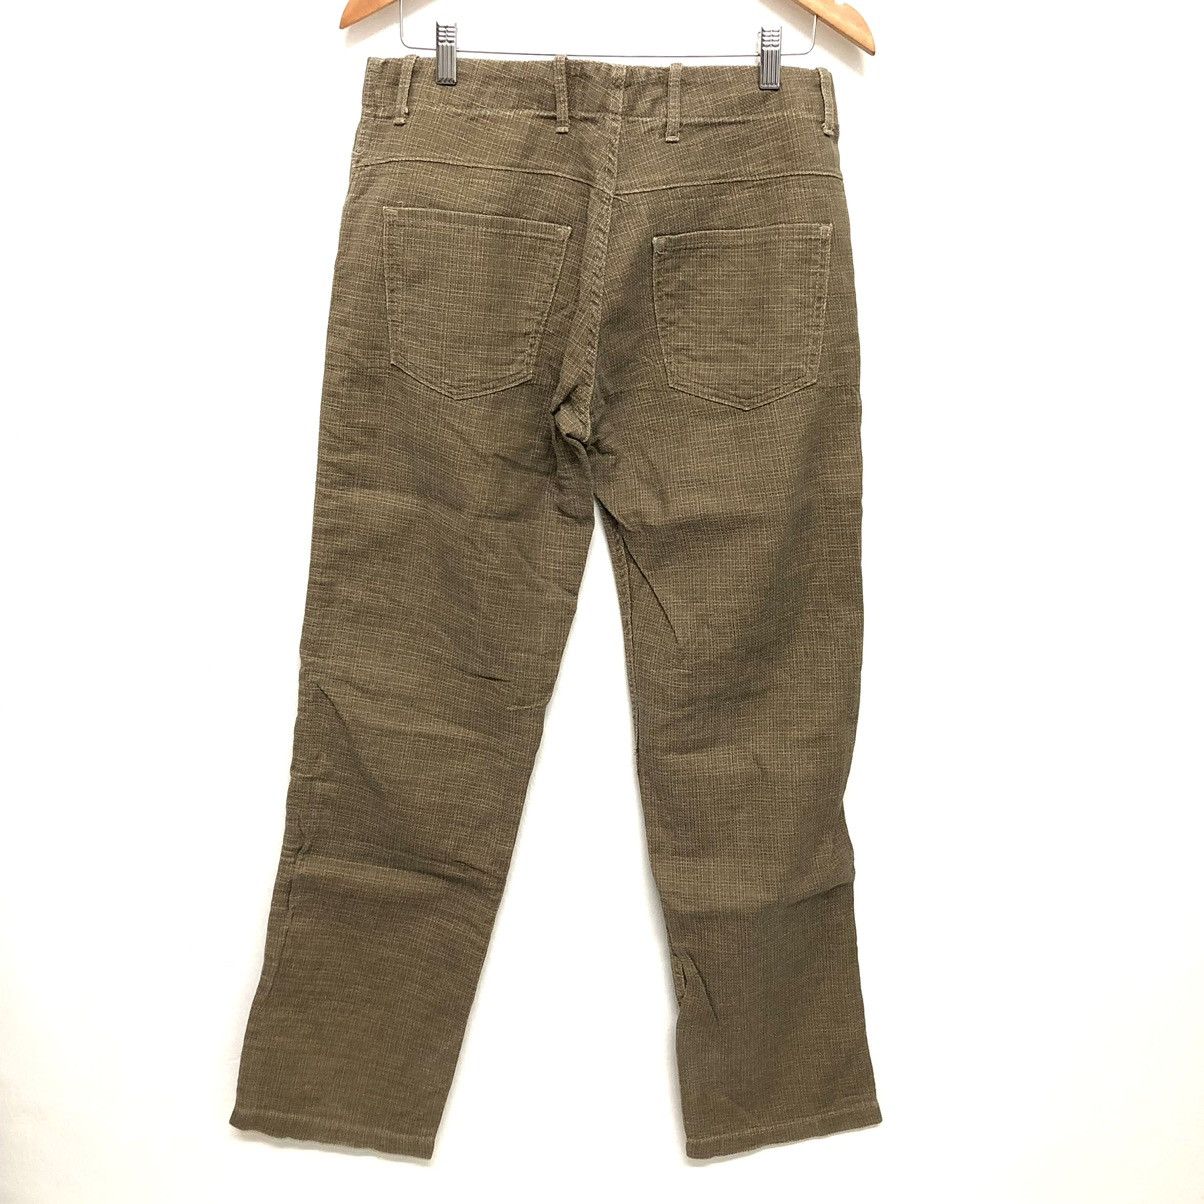 Vintage Vintage 63’ John Bull unknown Soldier Pants Size US 30 / EU 46 - 5 Thumbnail